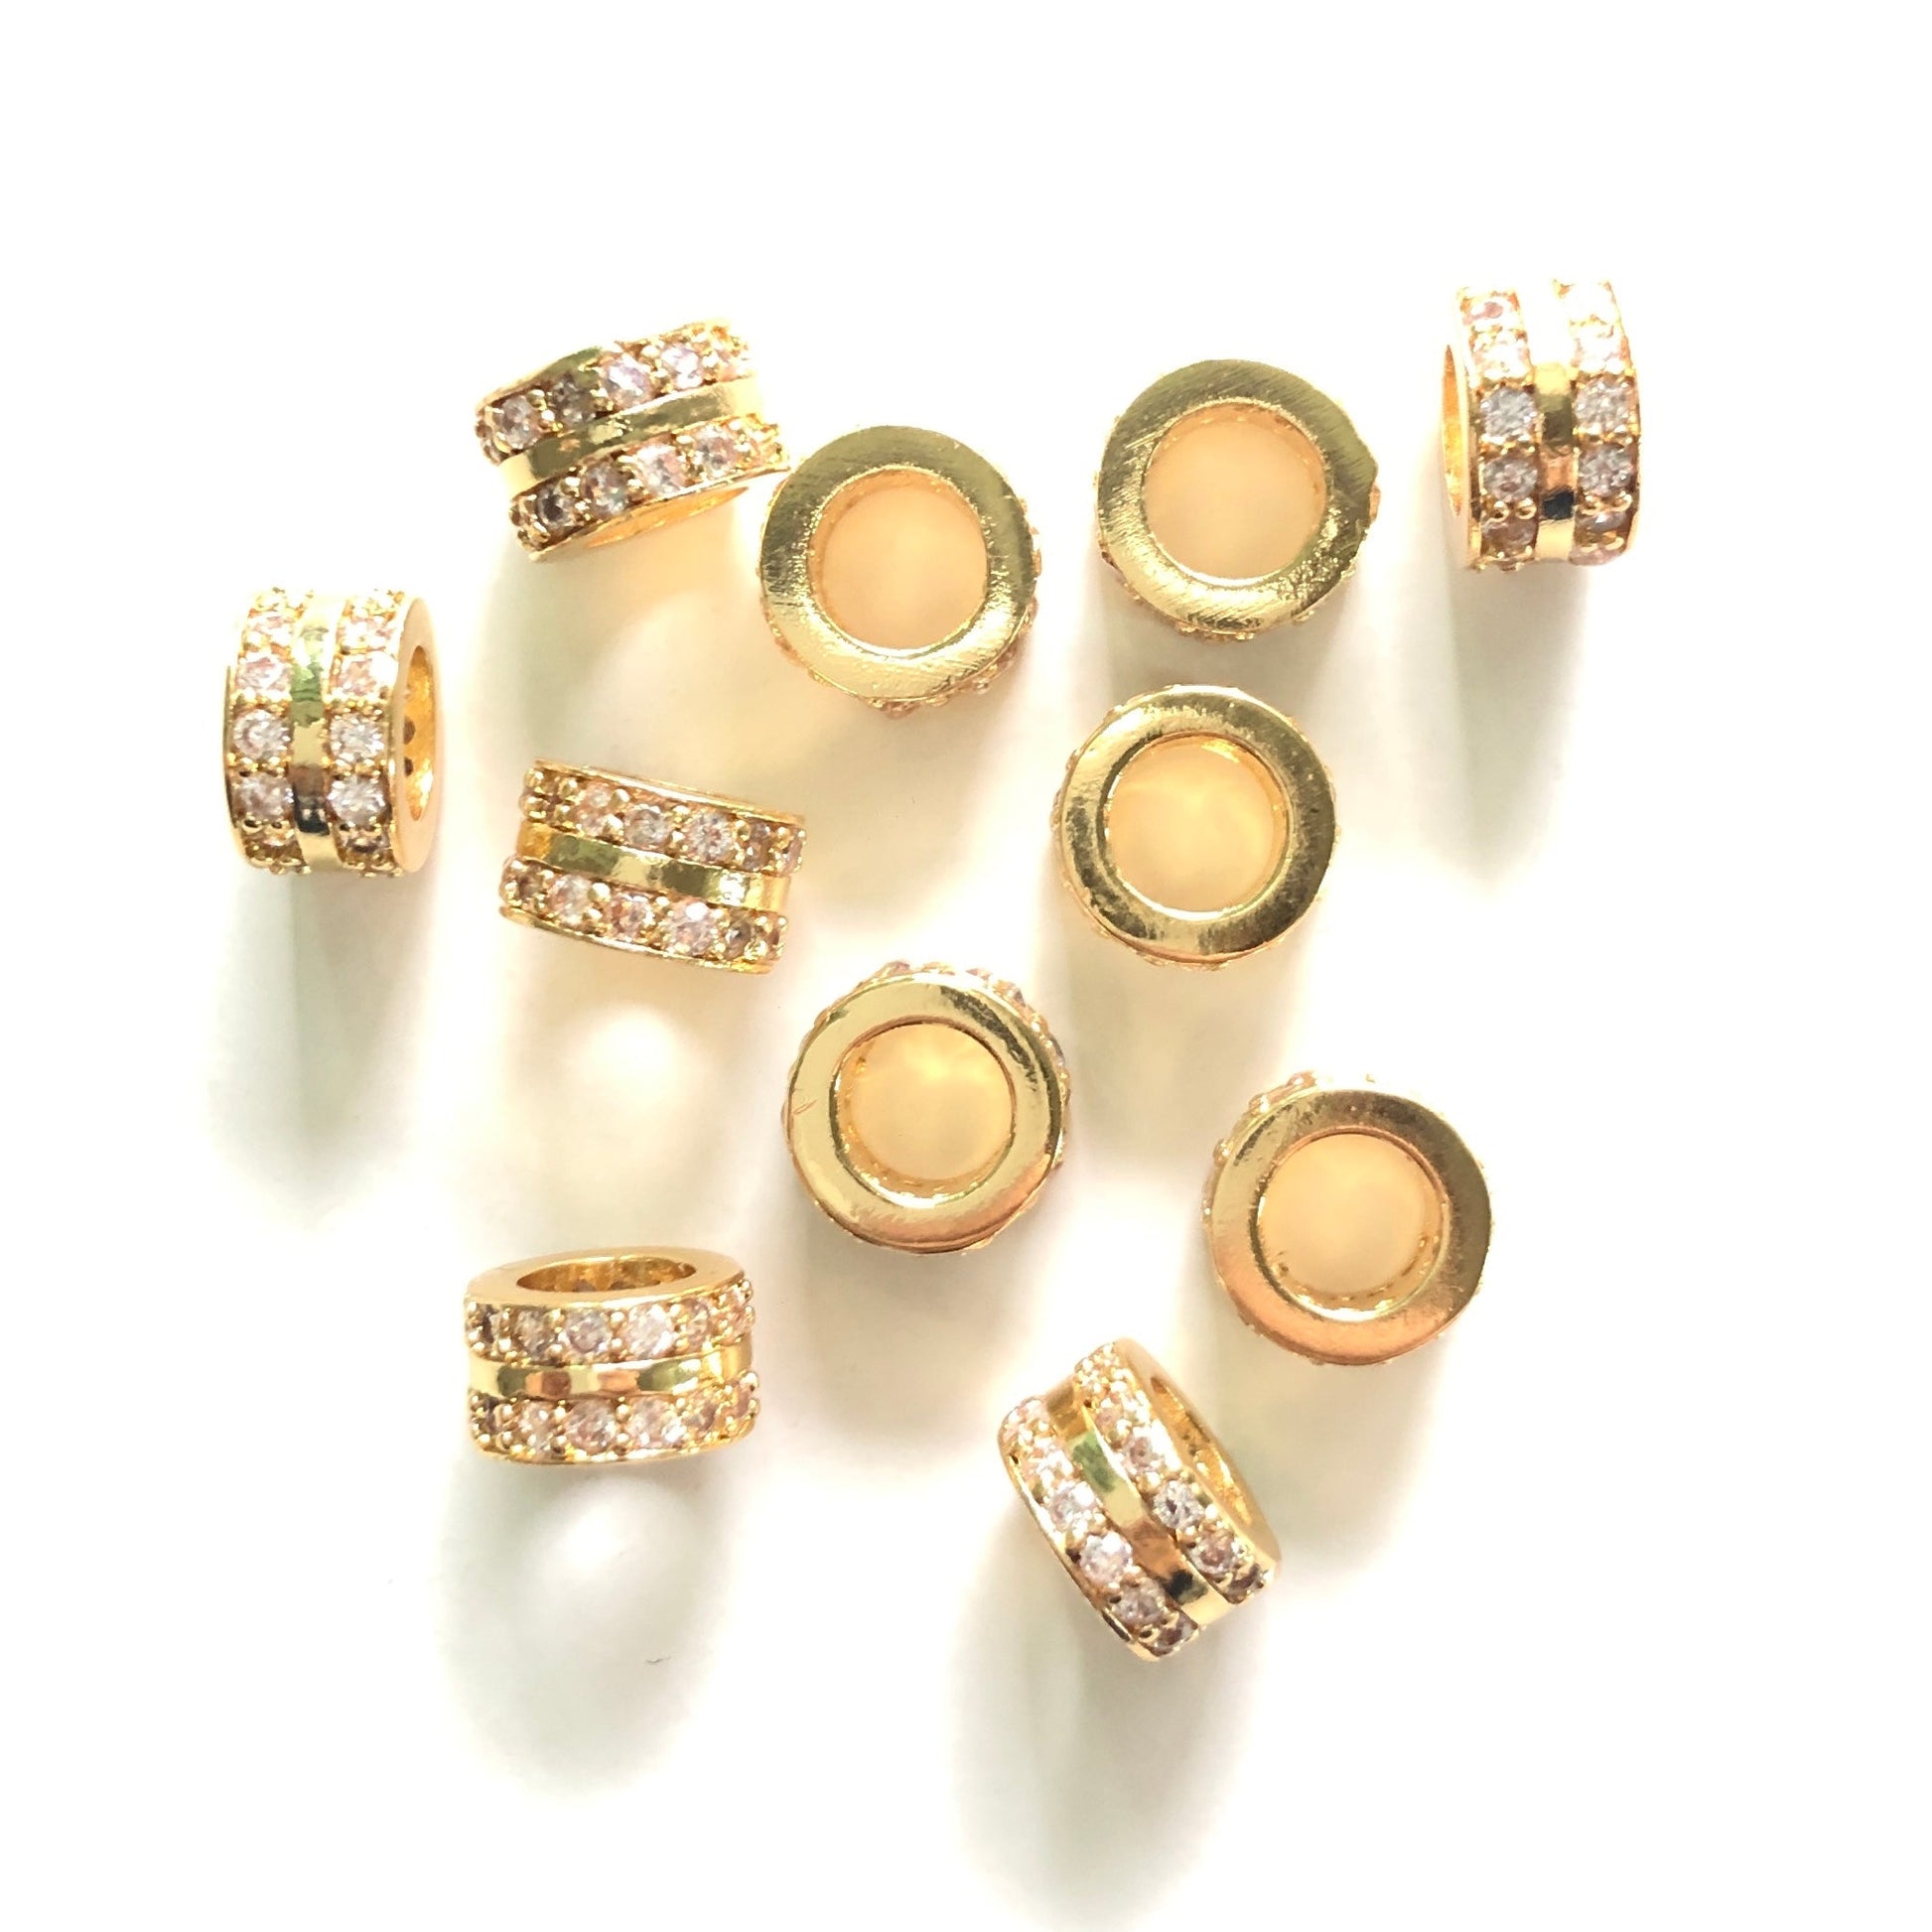 20pcs/lot 8.5*5.2mm Clear CZ Paved Wheel Rondelle Spacers Gold CZ Paved Spacers Rondelle Beads Charms Beads Beyond